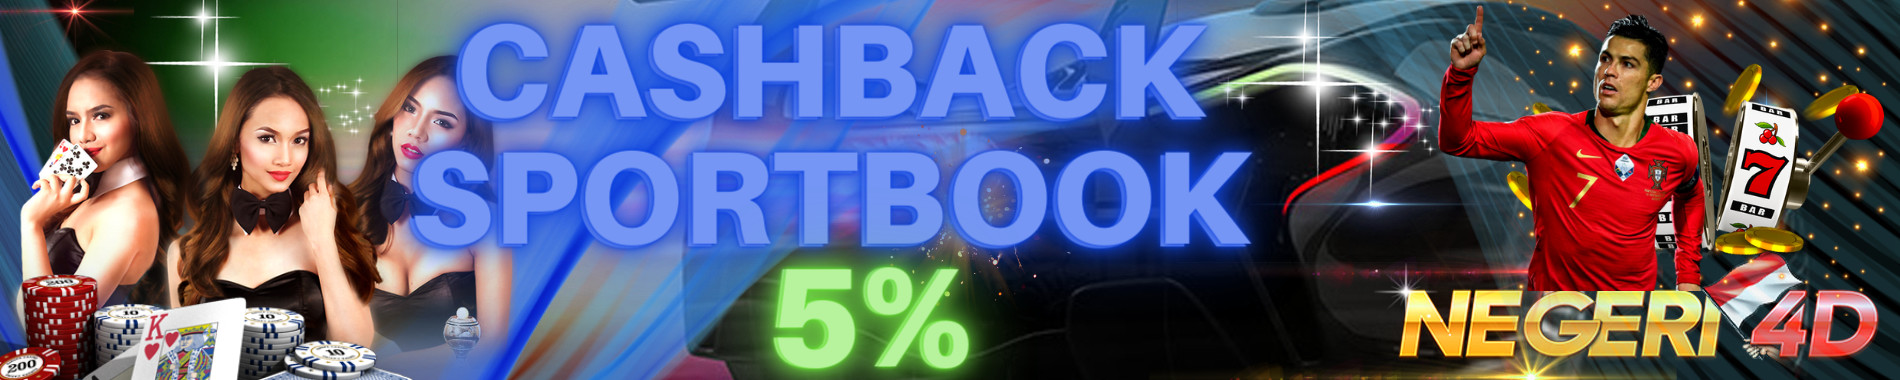 Cashback sportbook 5%, Negeri4d